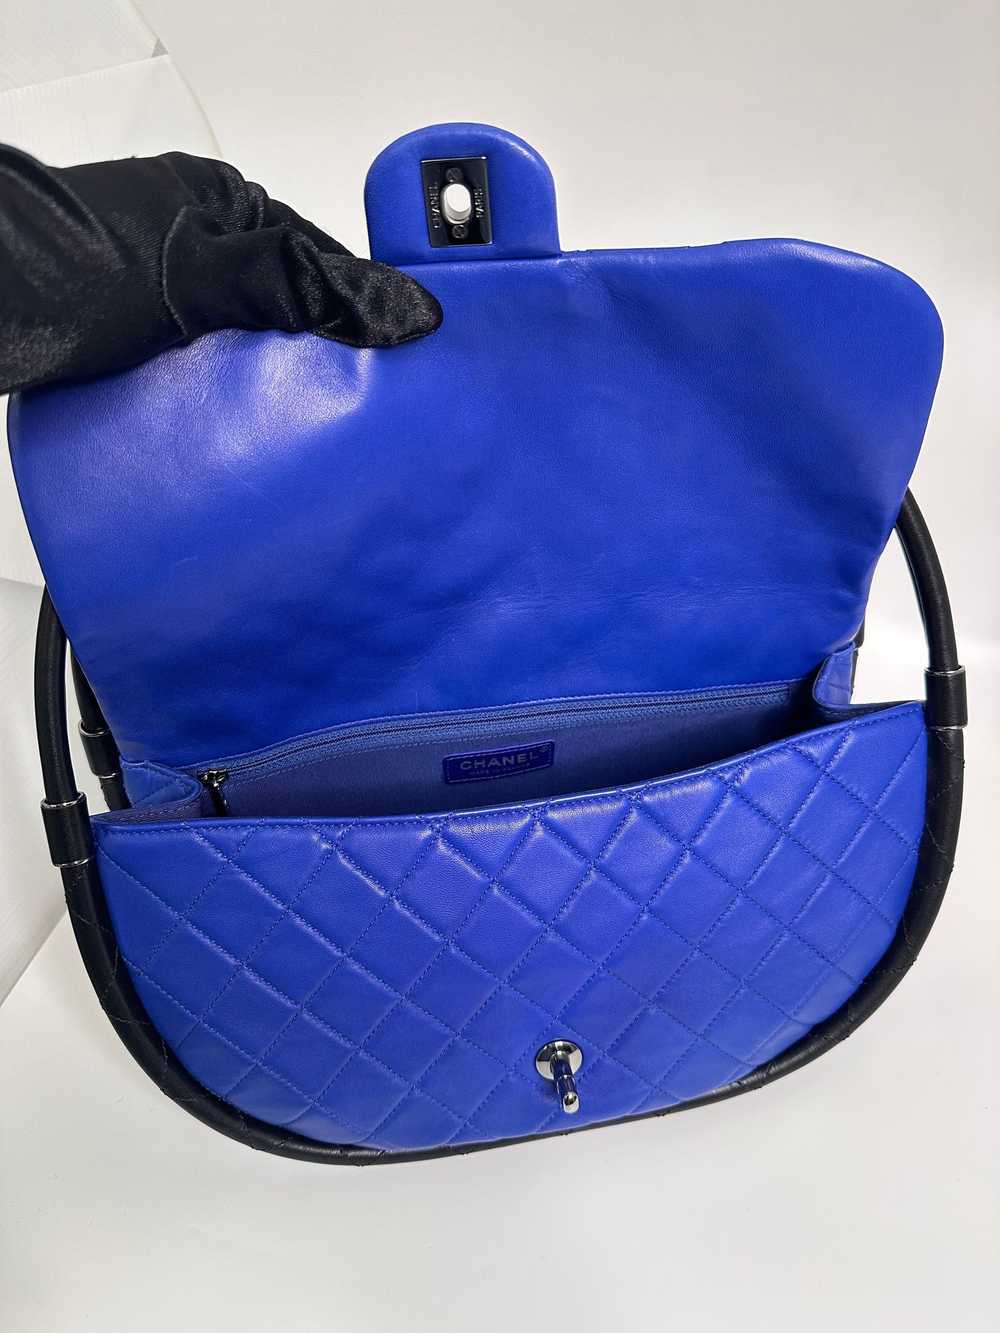 Chanel SS13 Hula Hoop Bag Blue - image 12